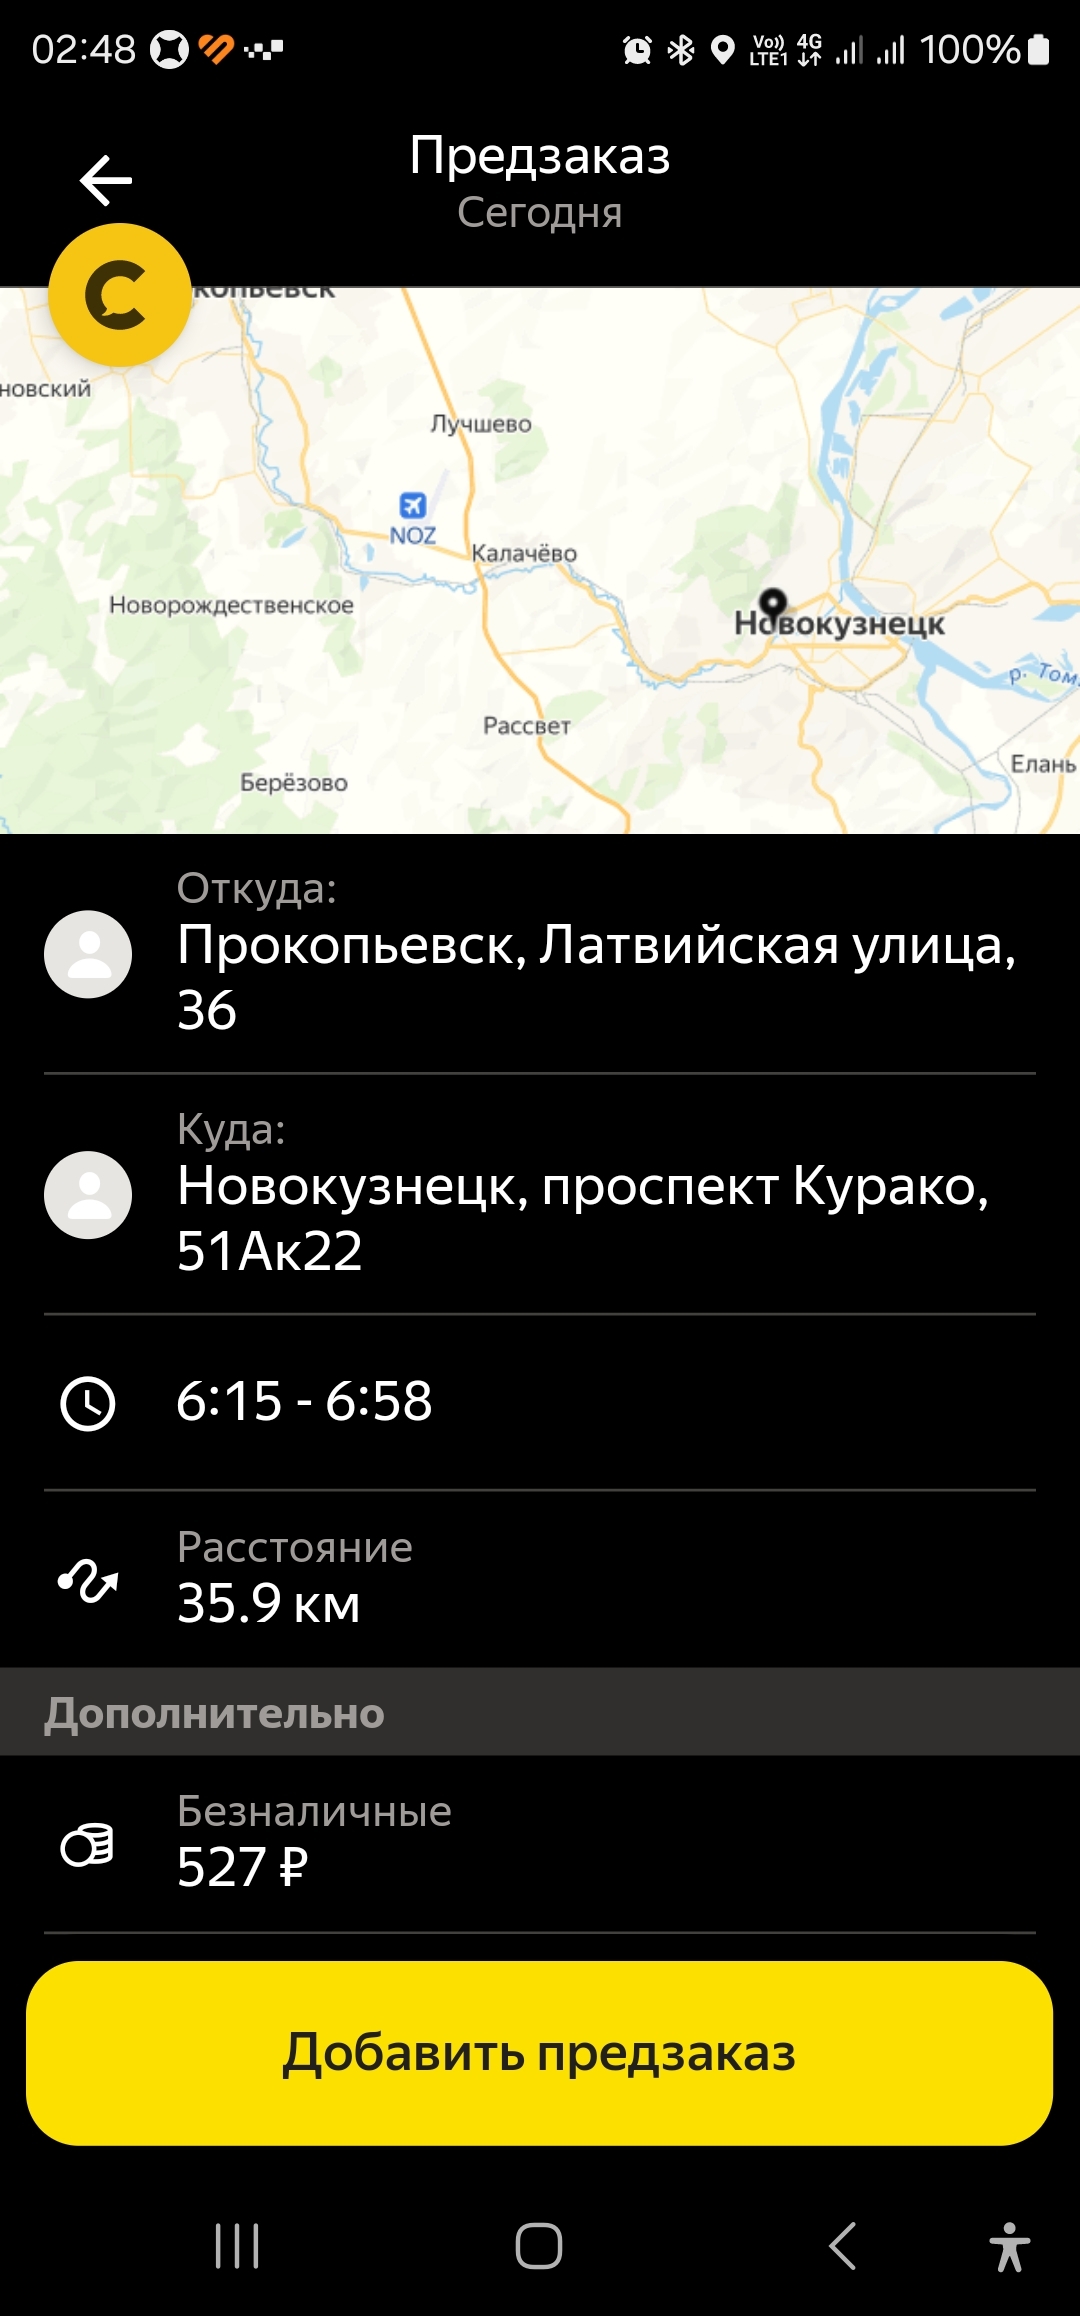 Almost free - Yandex., Taxi, Longpost